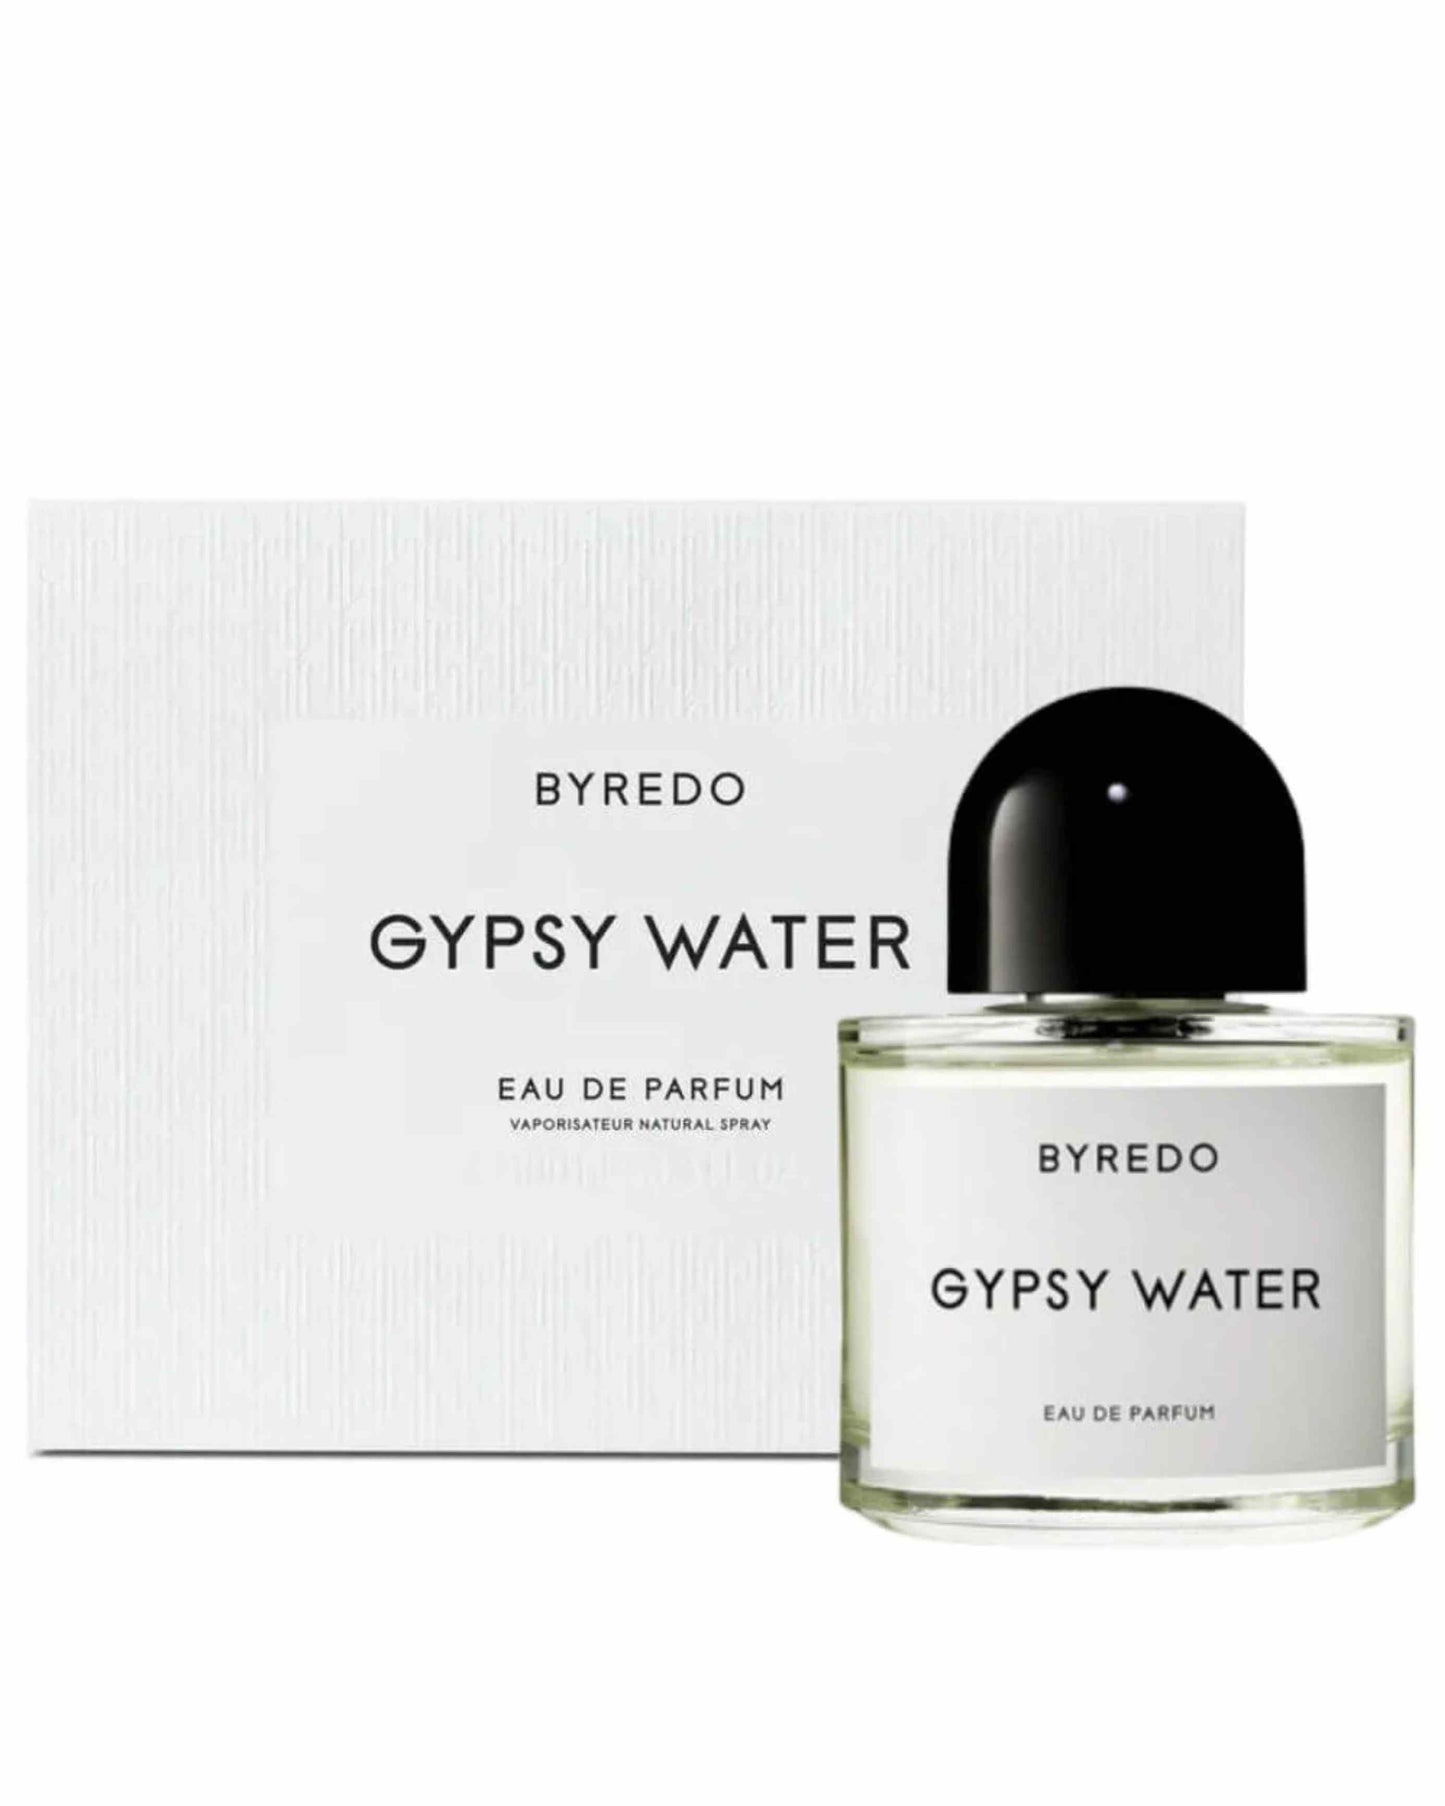 BYREDO – GYPSY WATER Eau De Parfum